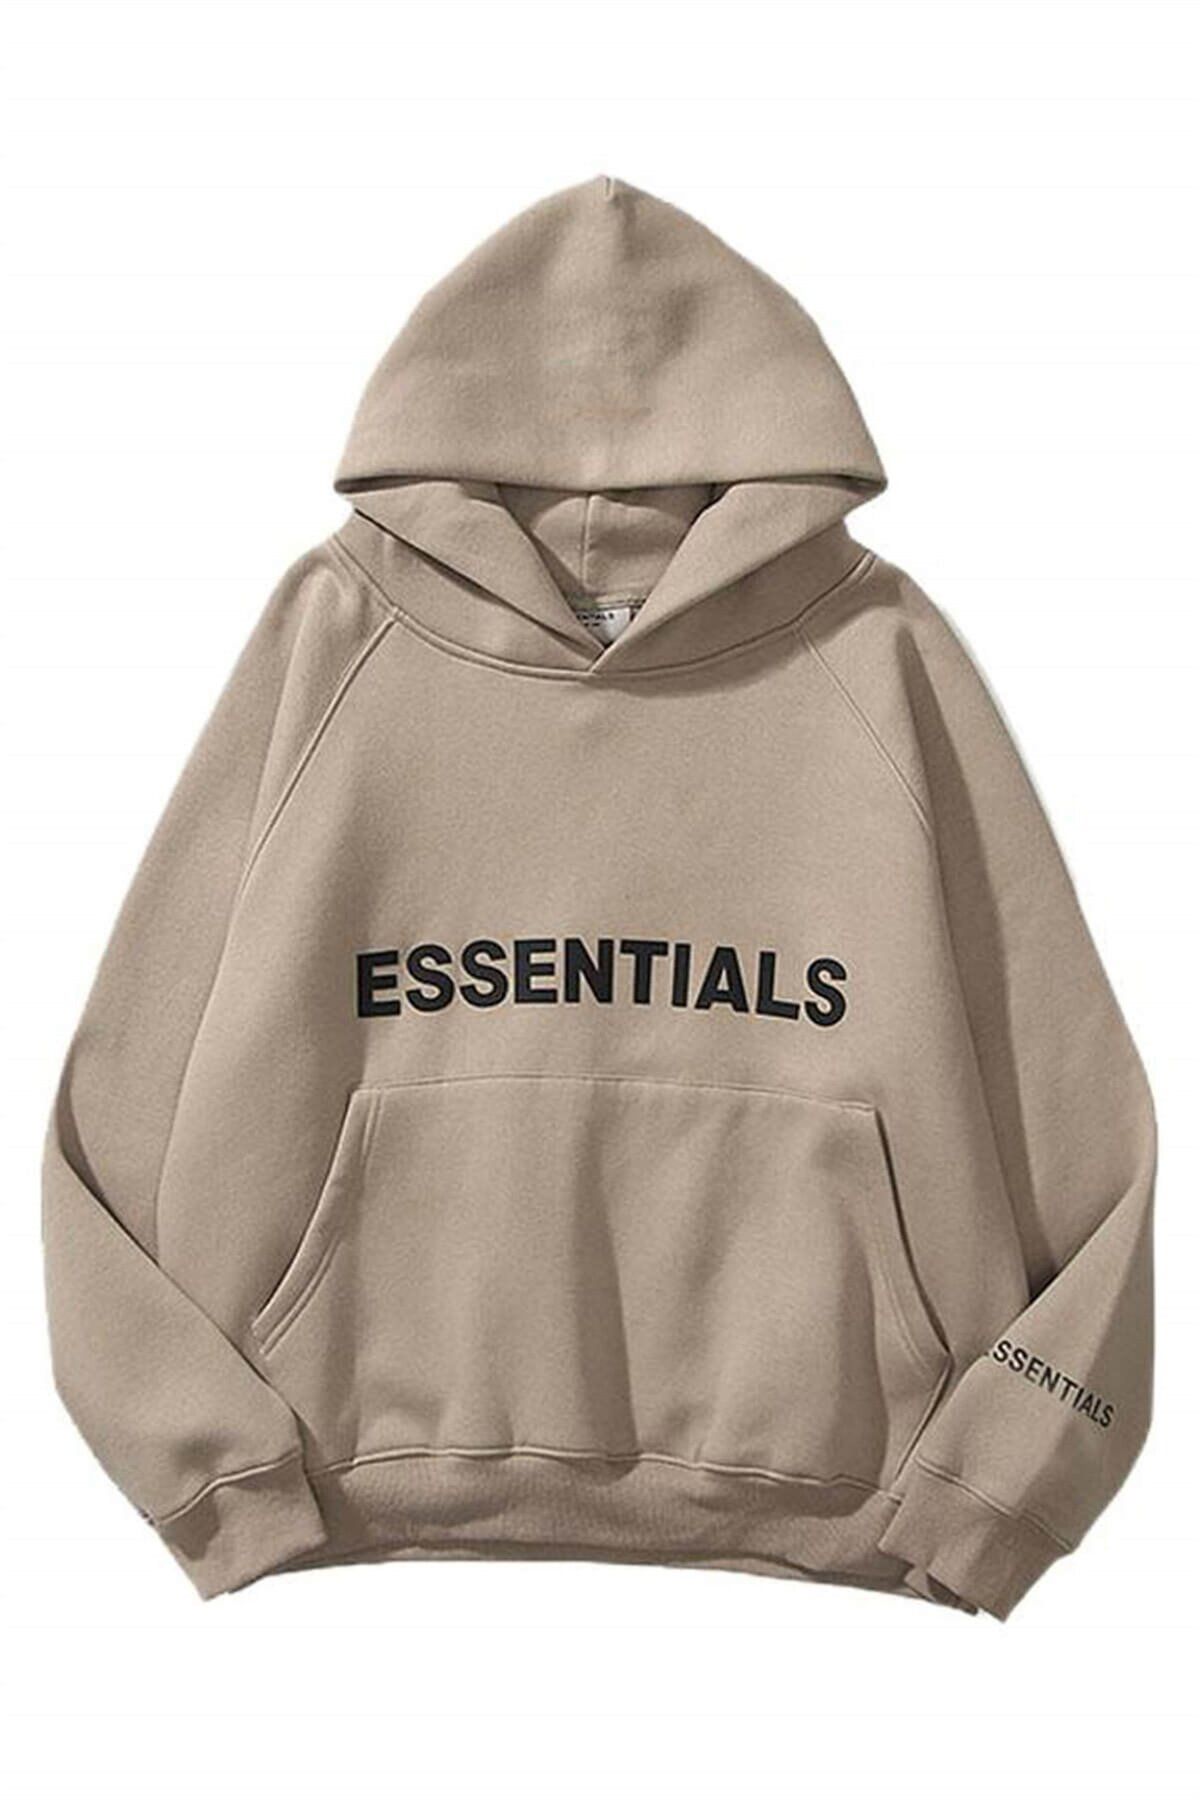 Trendiz Unisex Taş Essentials Sweatshirt Hoodie